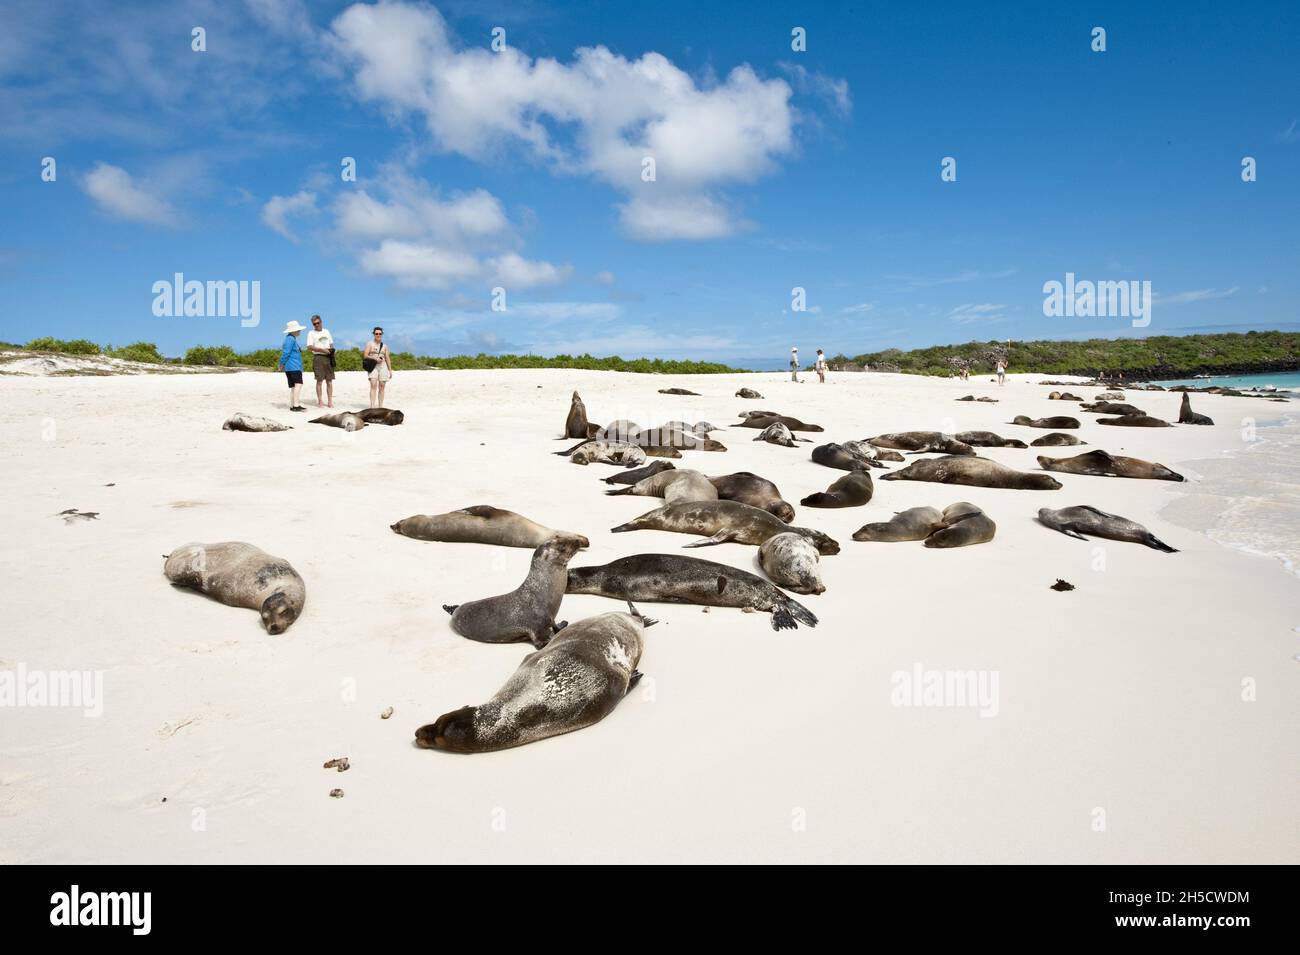 Galapagos sea lion (Zalophus californianus wollebaeki, Zalophus wollebaeki), Tourists among sleeping Galapagos sea lions on the beach, Ecuador, Stock Photo